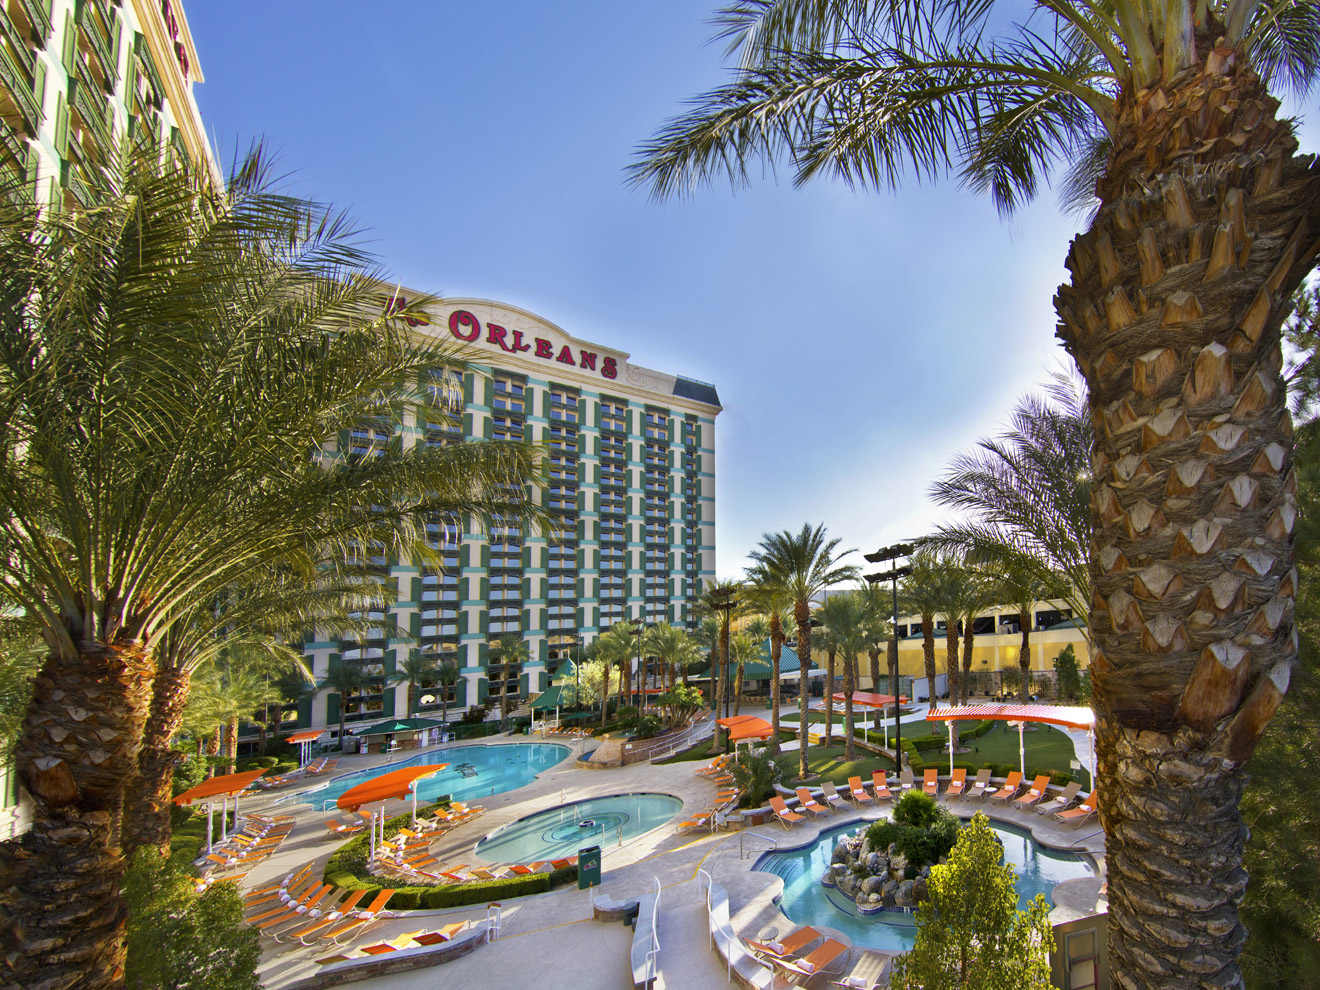 Orleans Hotel Vegas